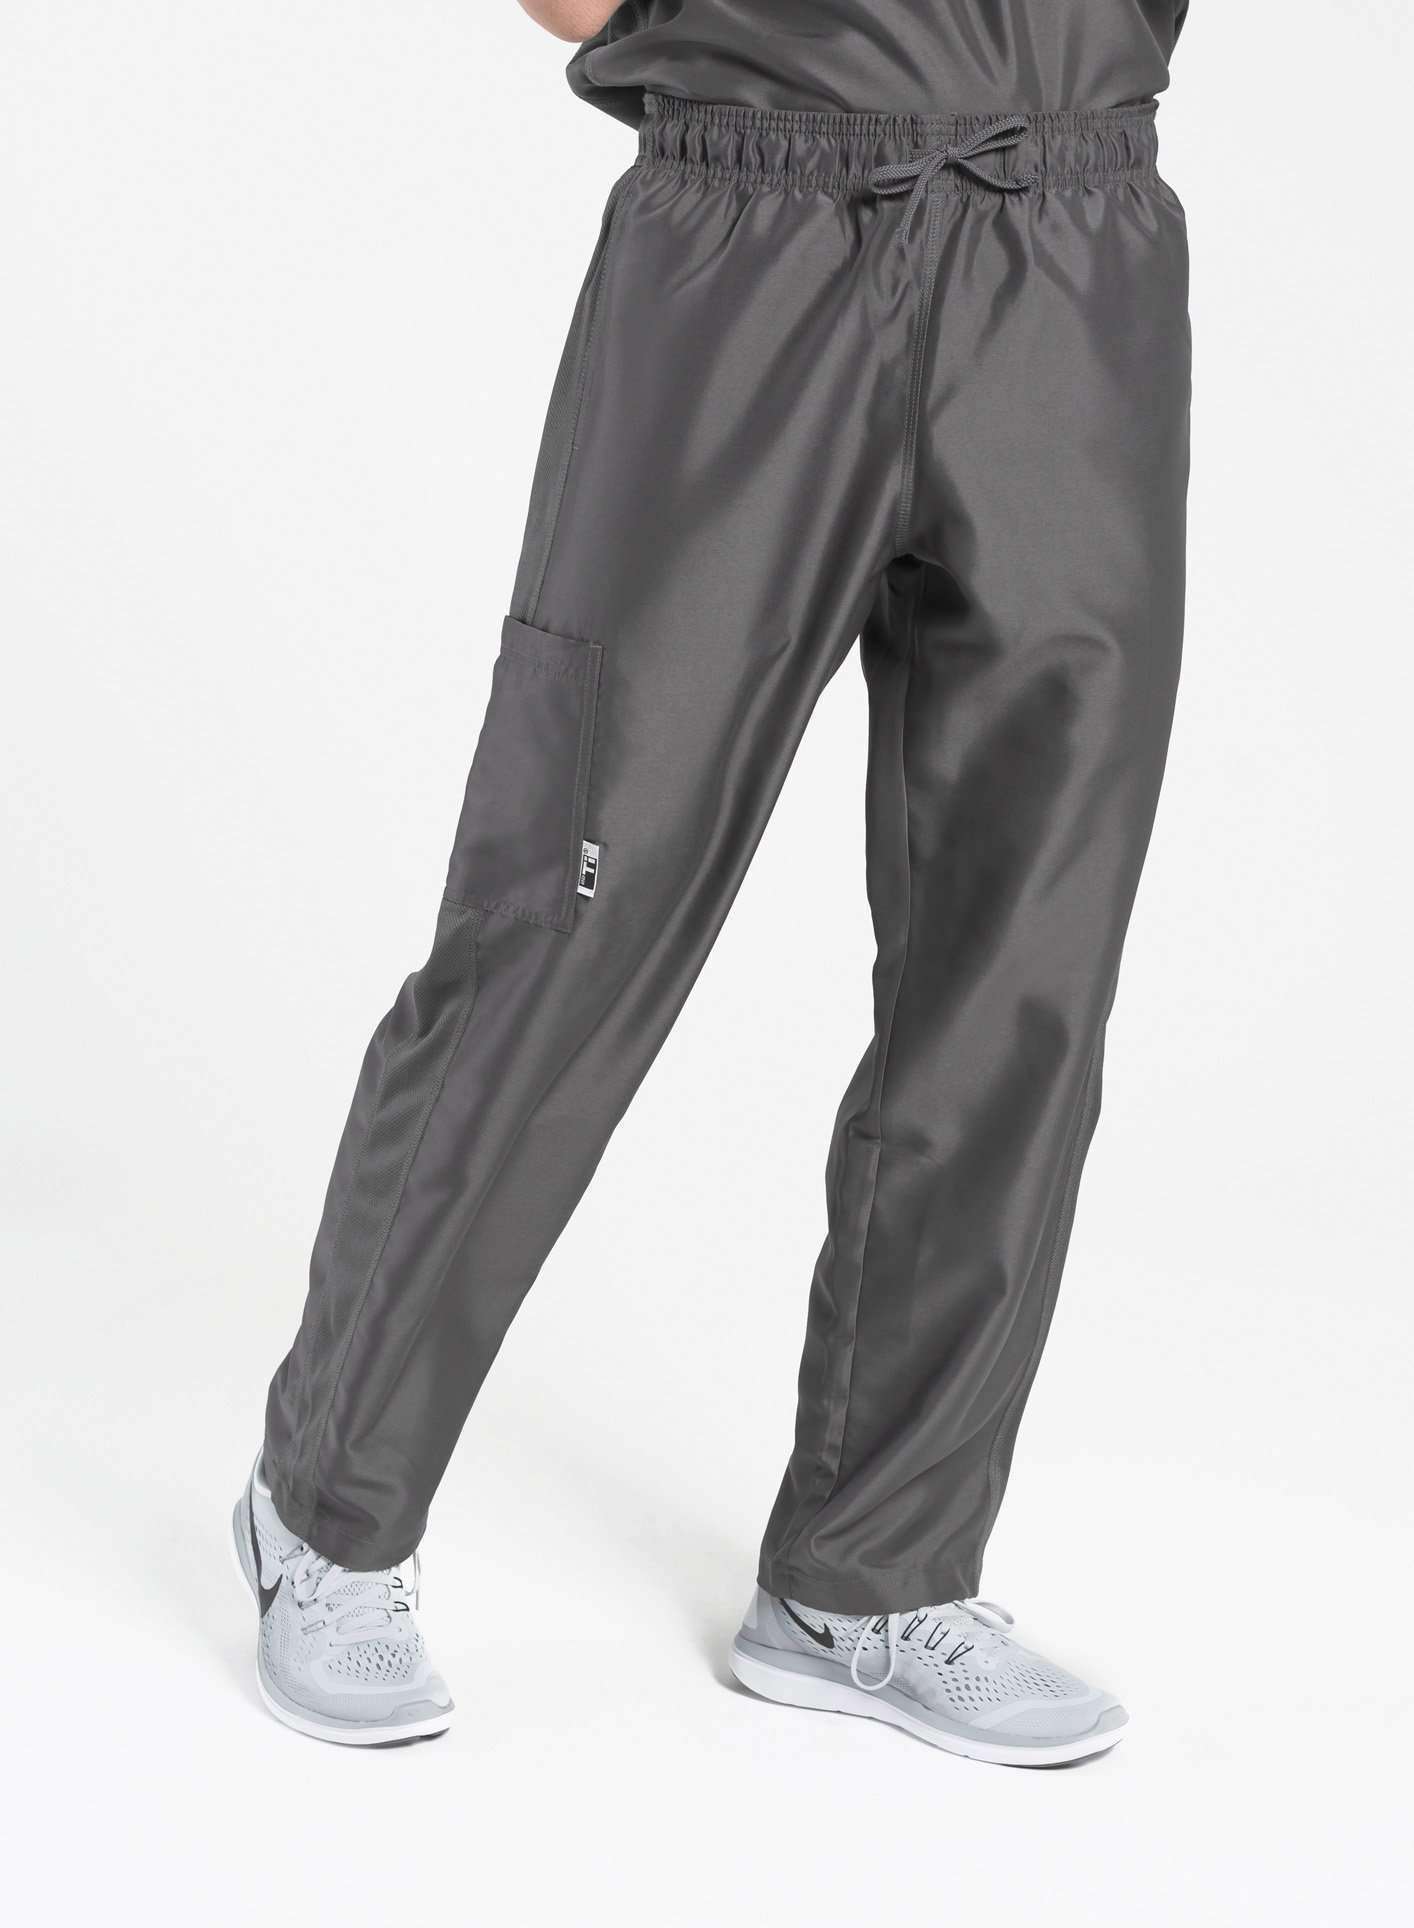 mens Elements cargo pocket relaxed fit scrub pants dark gray